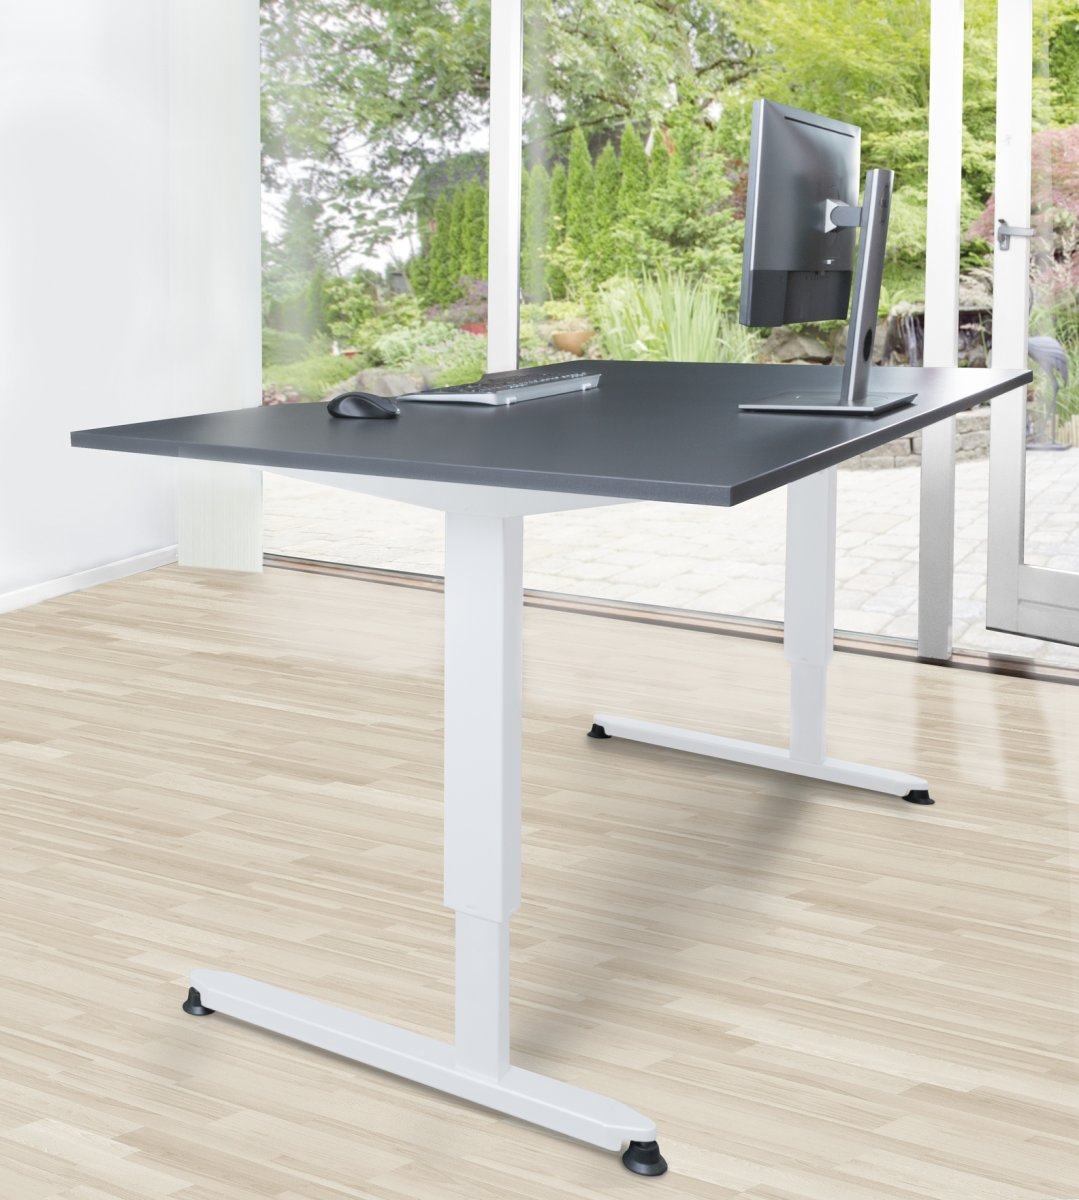 Stay hæve/sænkebord, 180x90 cm, grå/hvid